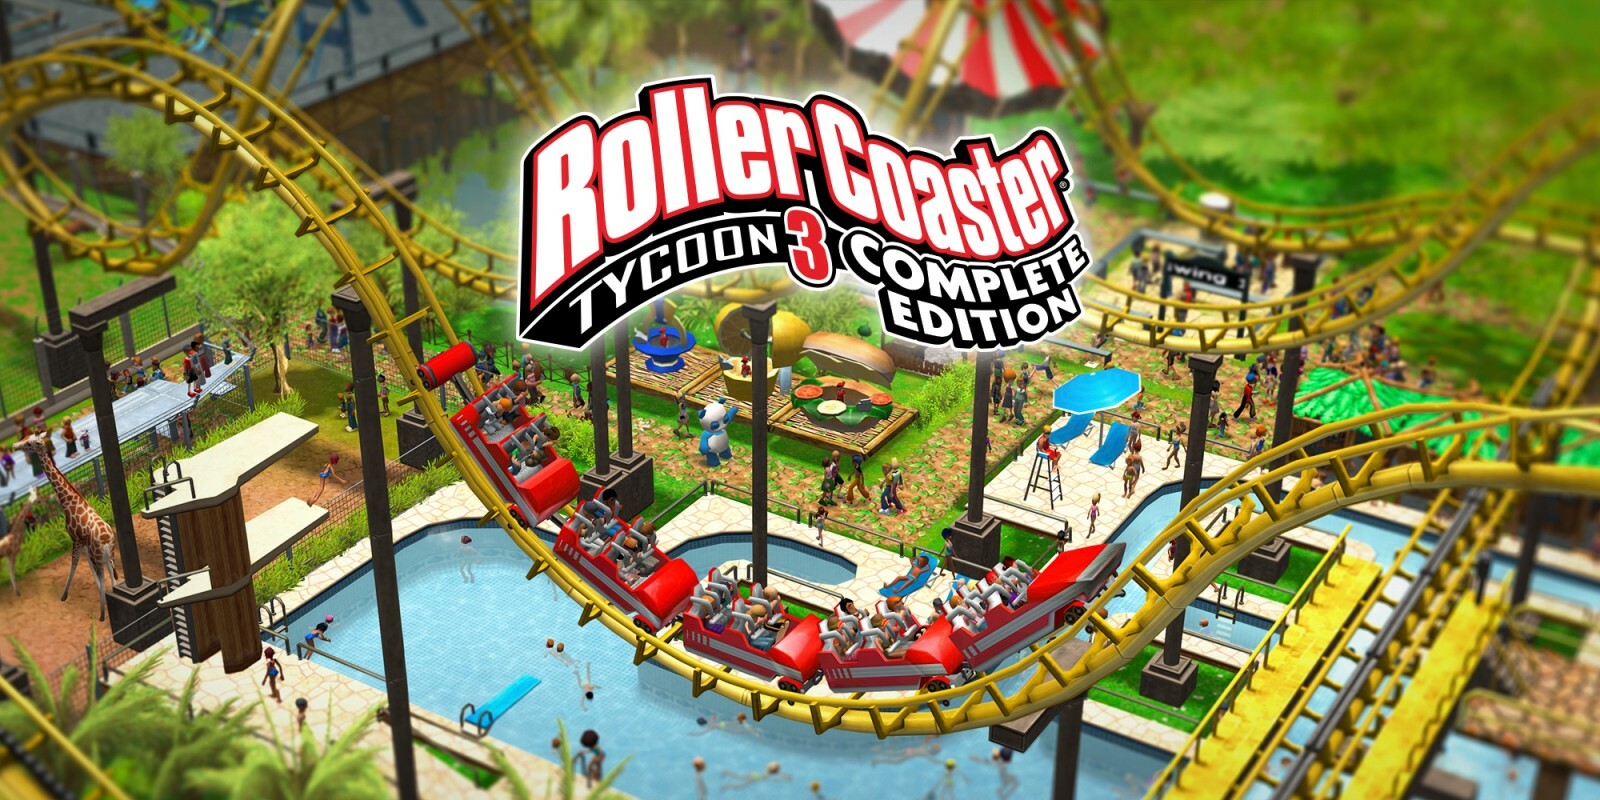 RollerCoaster Tycoon: легендарная франшиза, приобретенная Atari